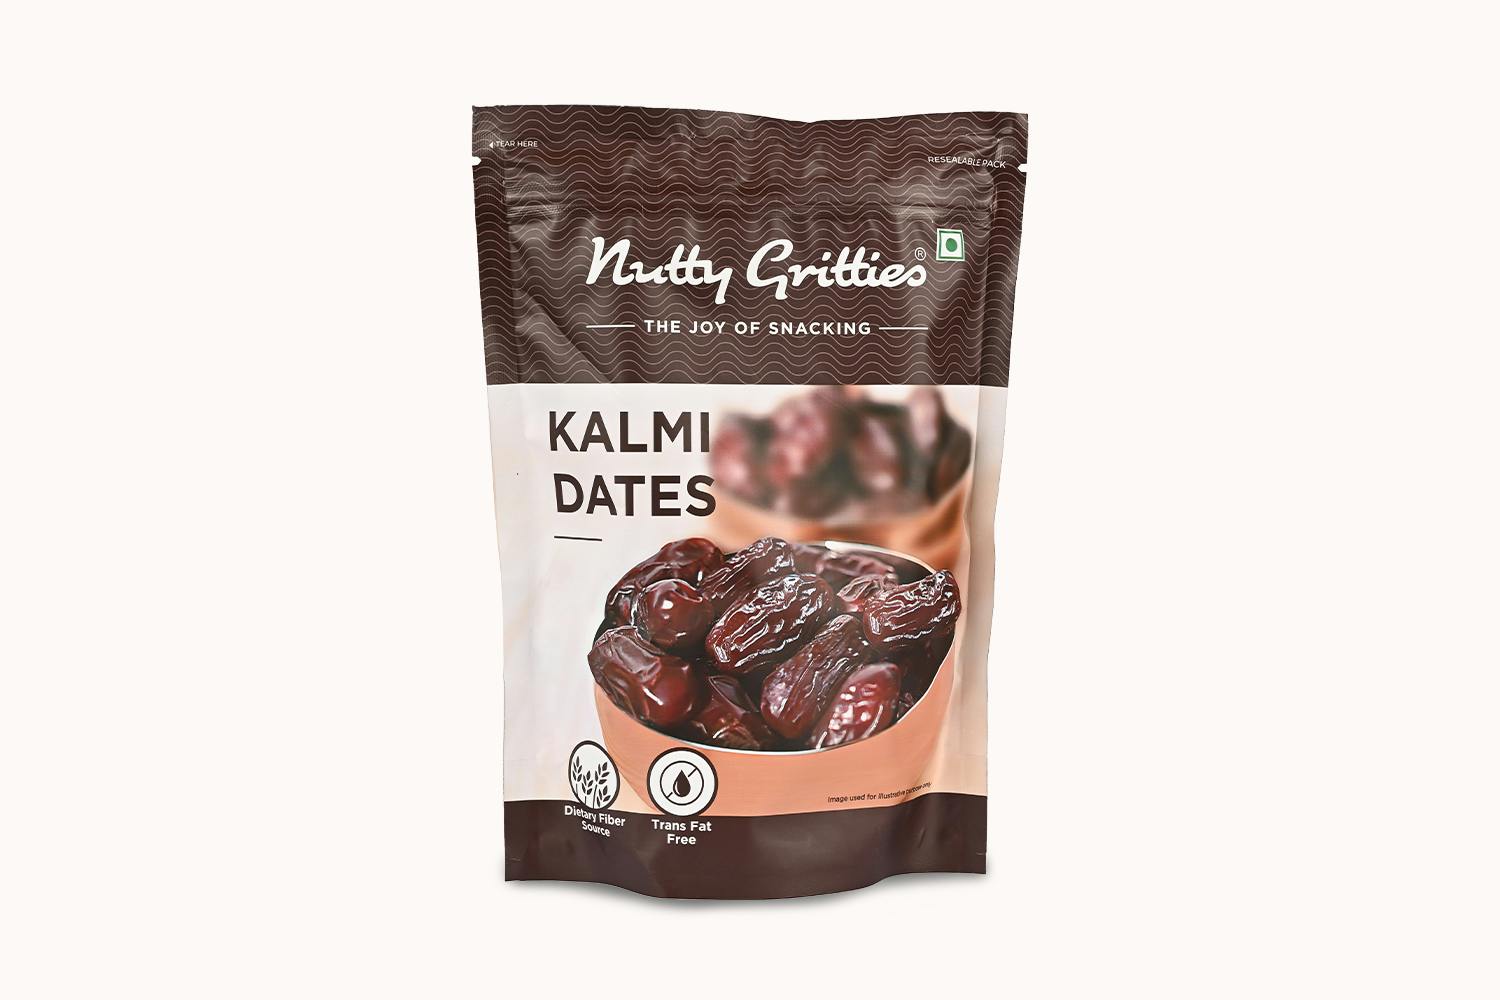 Nutty Gritties Kalmi Dates